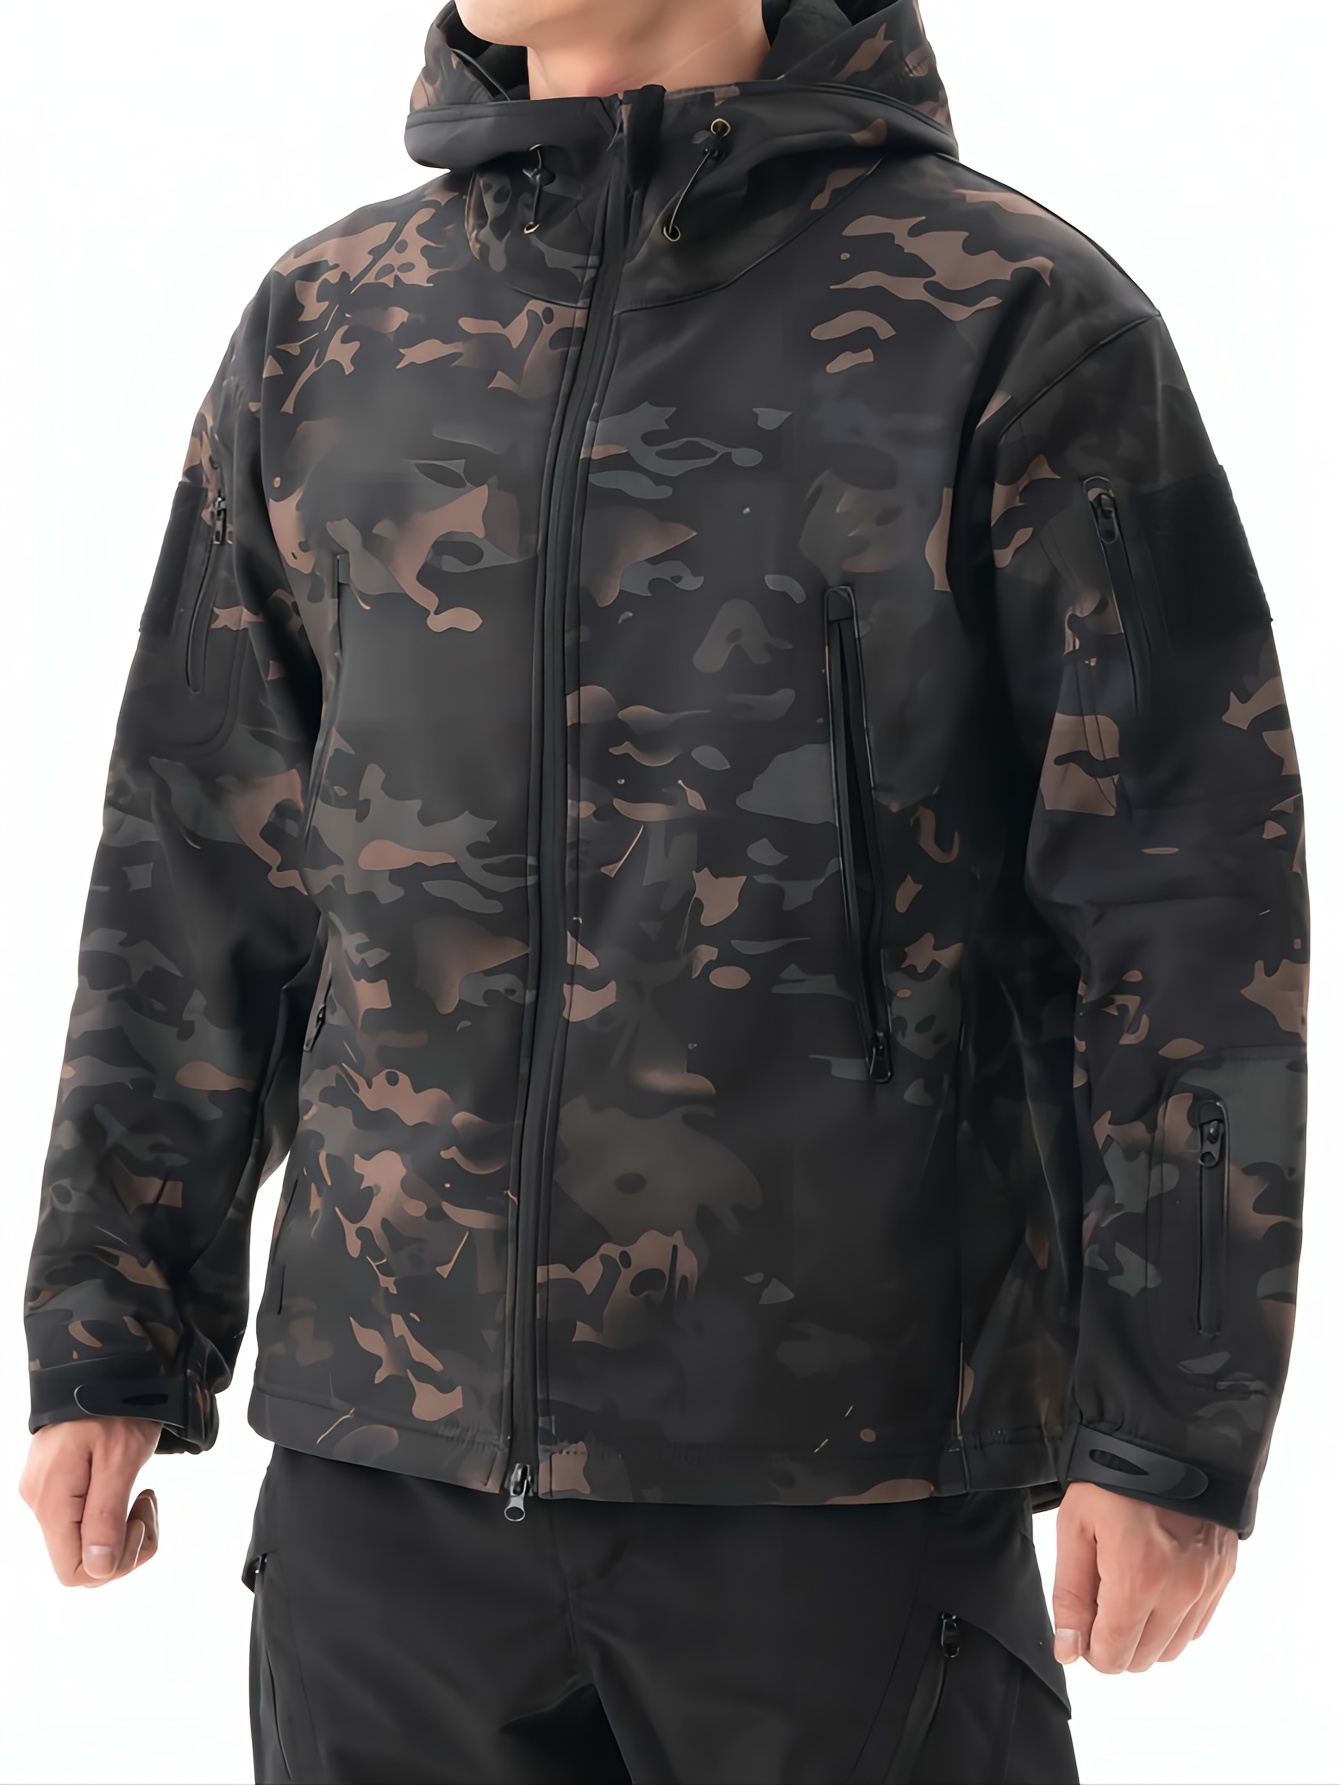 mens fleece hooded outdoor jacket multifunctional warm thermal windproof waterproof pocket jacket for autumn winter